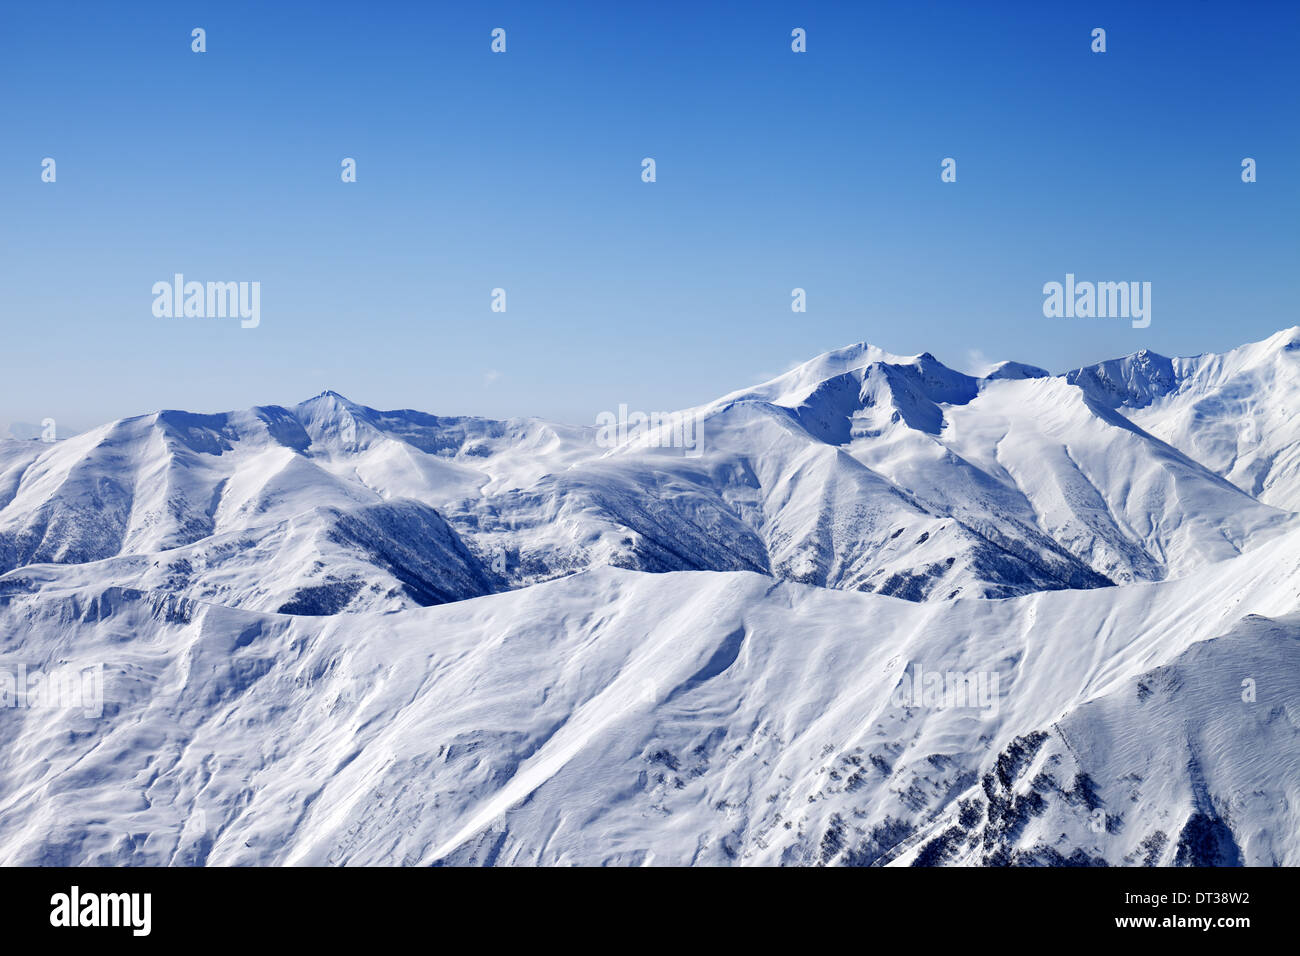 Snowy winter mountains and blue sky, view from ski slope. Caucasus Mountains, Georgia, ski resort Gudauri. Stock Photo